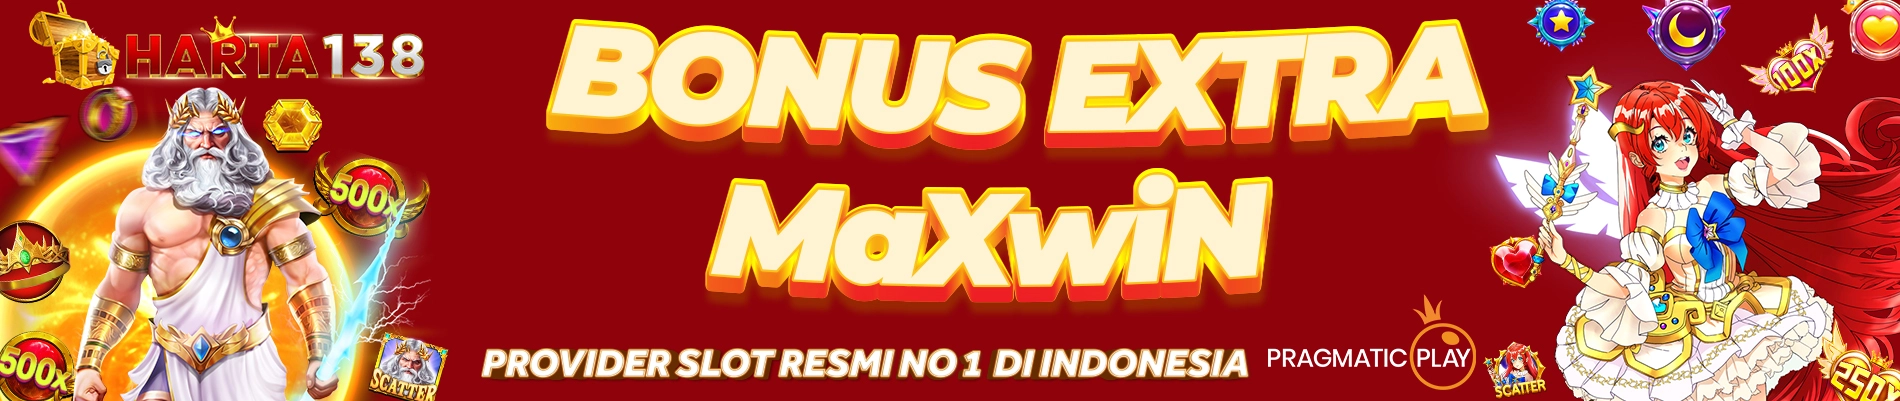 EVENT BONUS EXTRA MAXWIN ZEUS & PRINCESS HARTA138